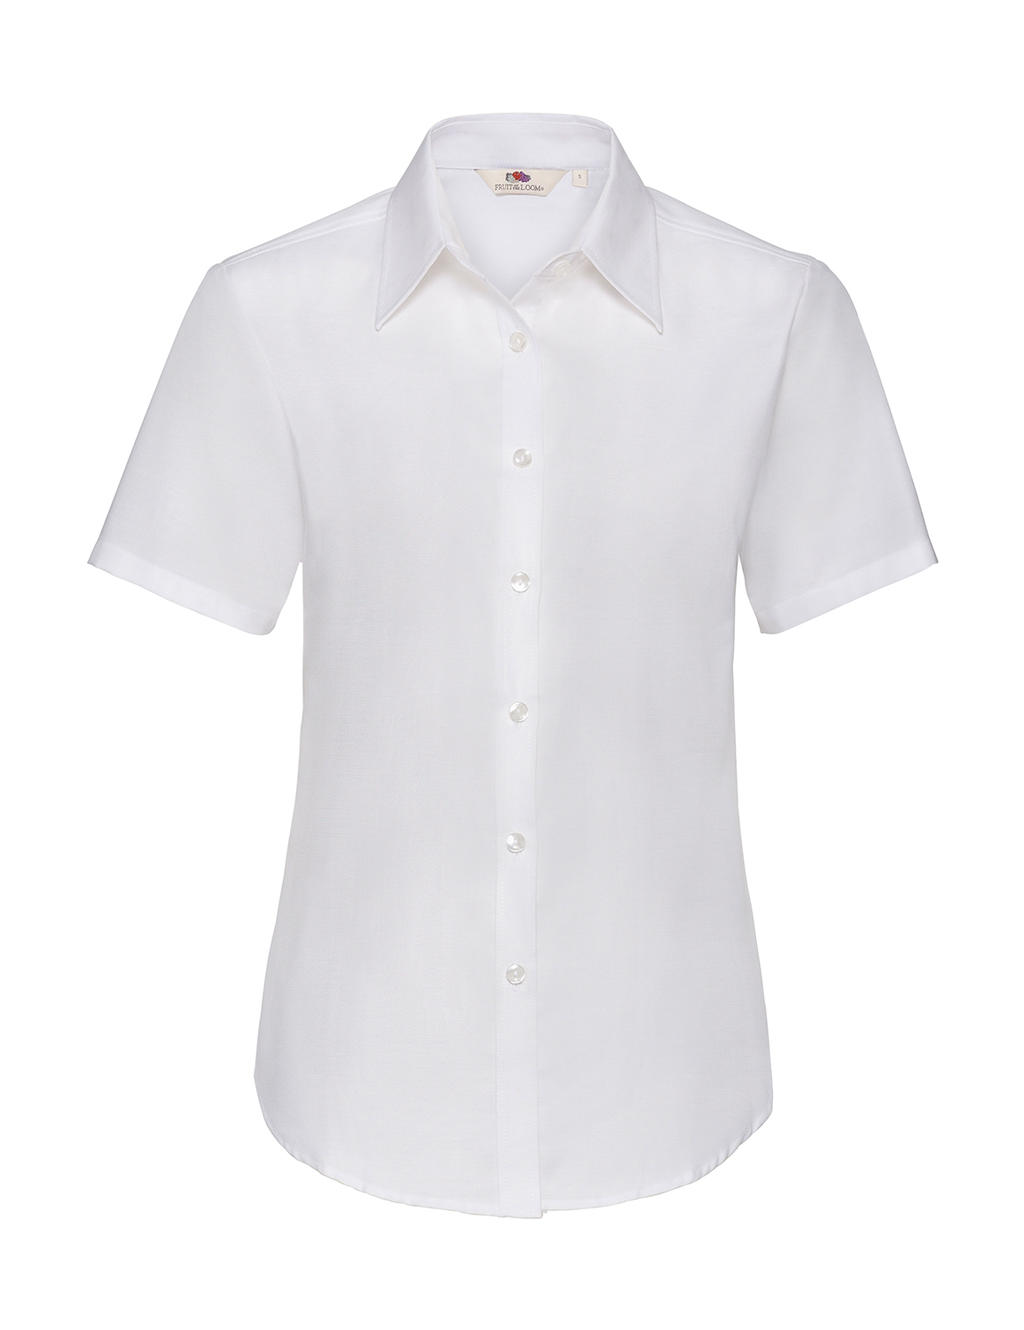  Ladies Oxford Shirt in Farbe White